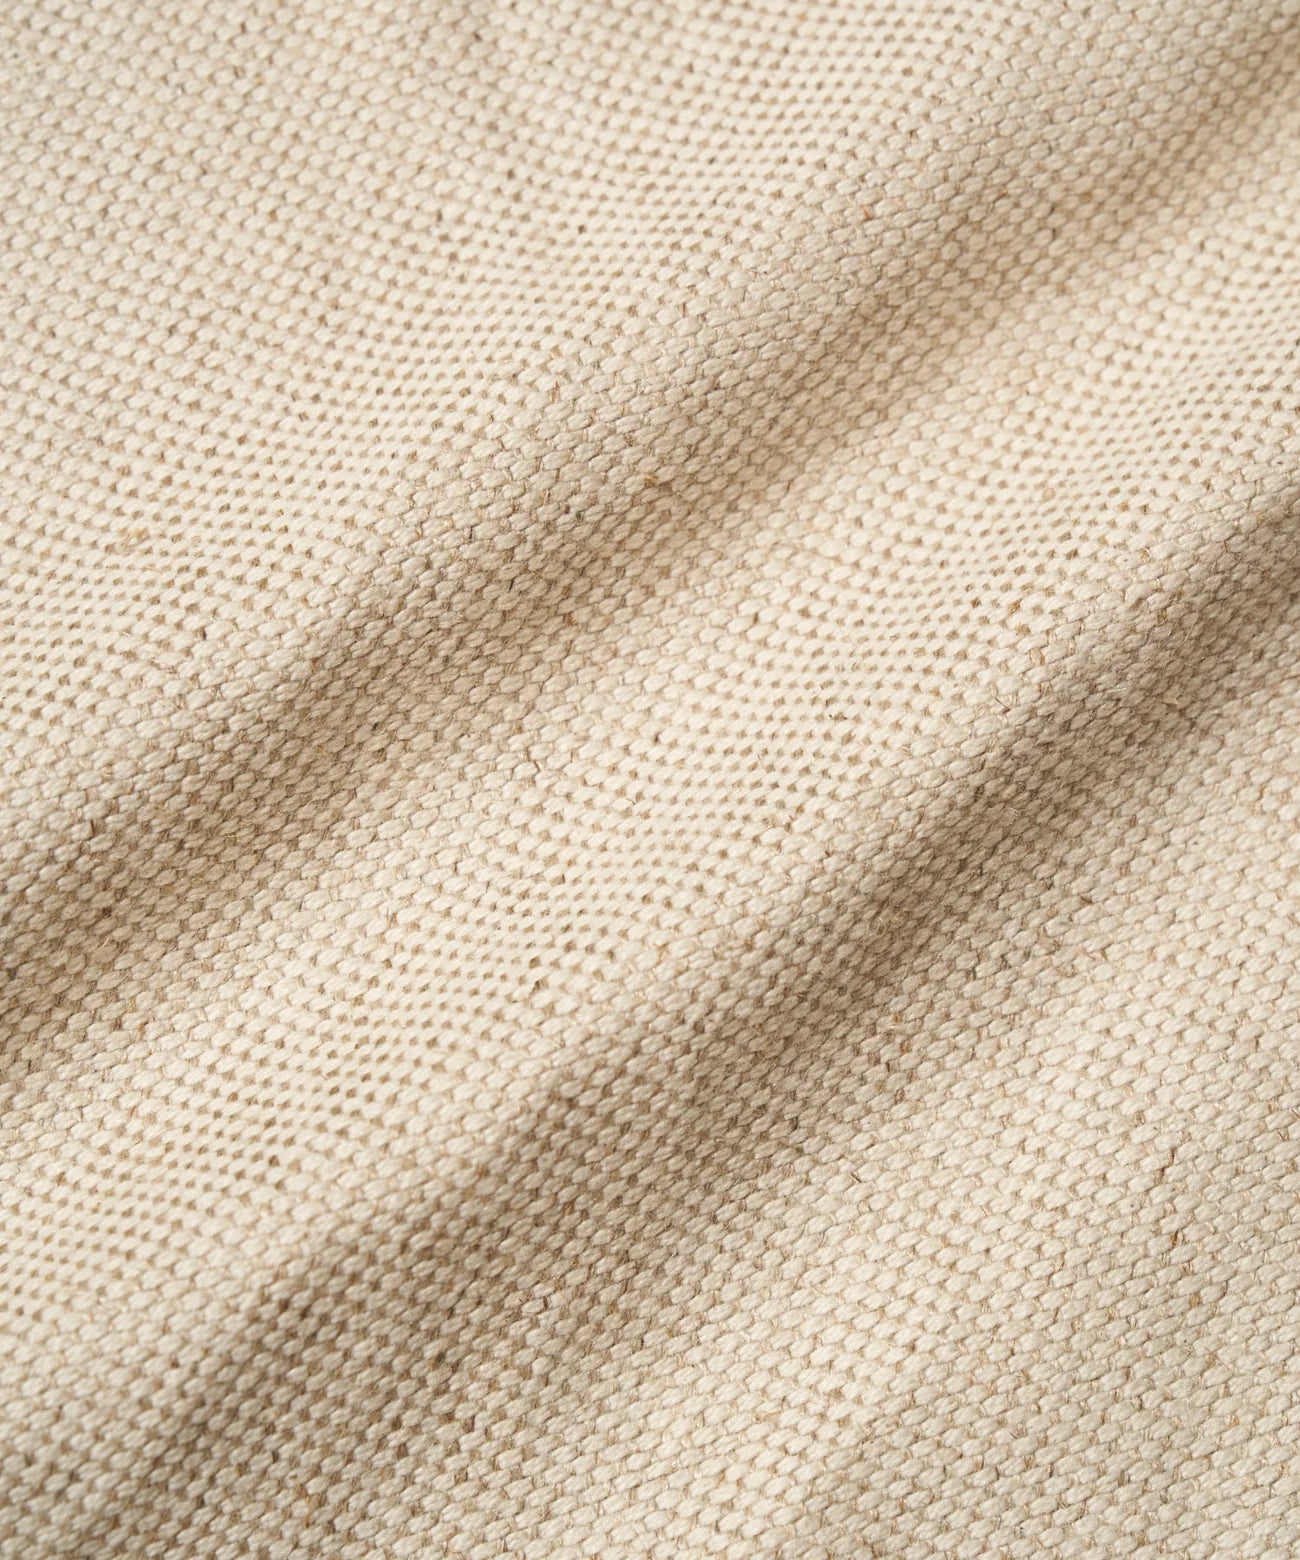 [Anatomica] TUSCAN Dress Cotton Linen Canvas / OatMeal